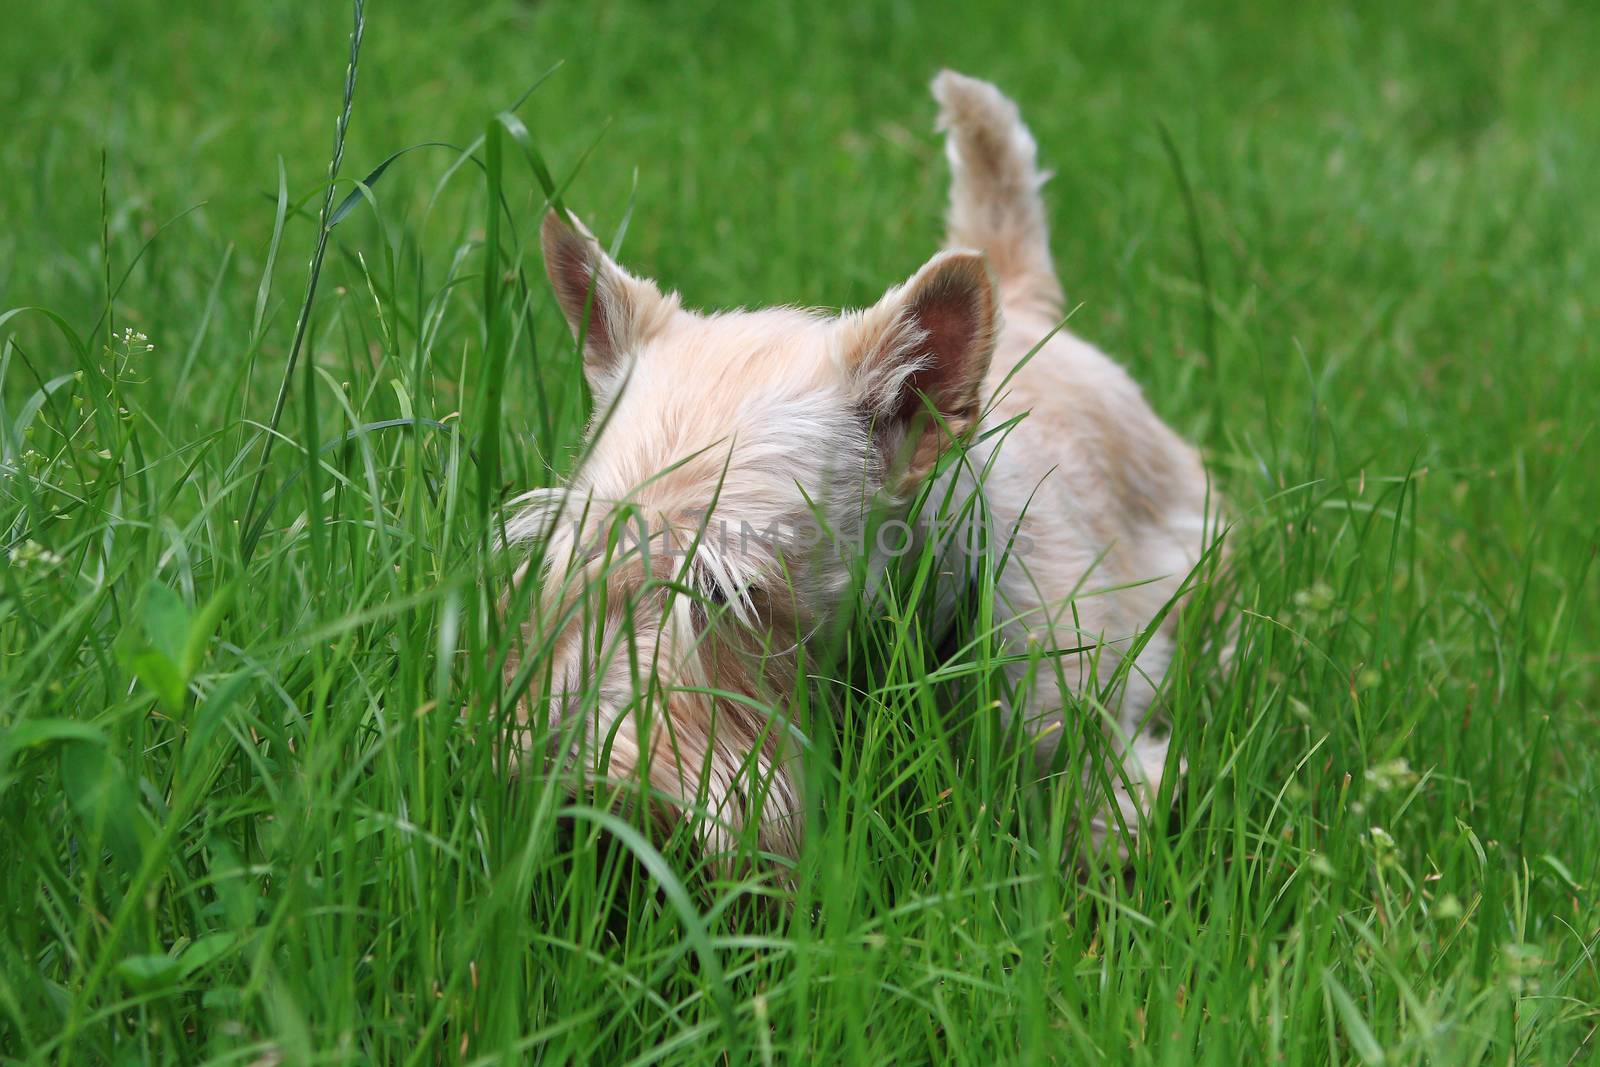 Wheaten Scottish Terrier walks in the garden